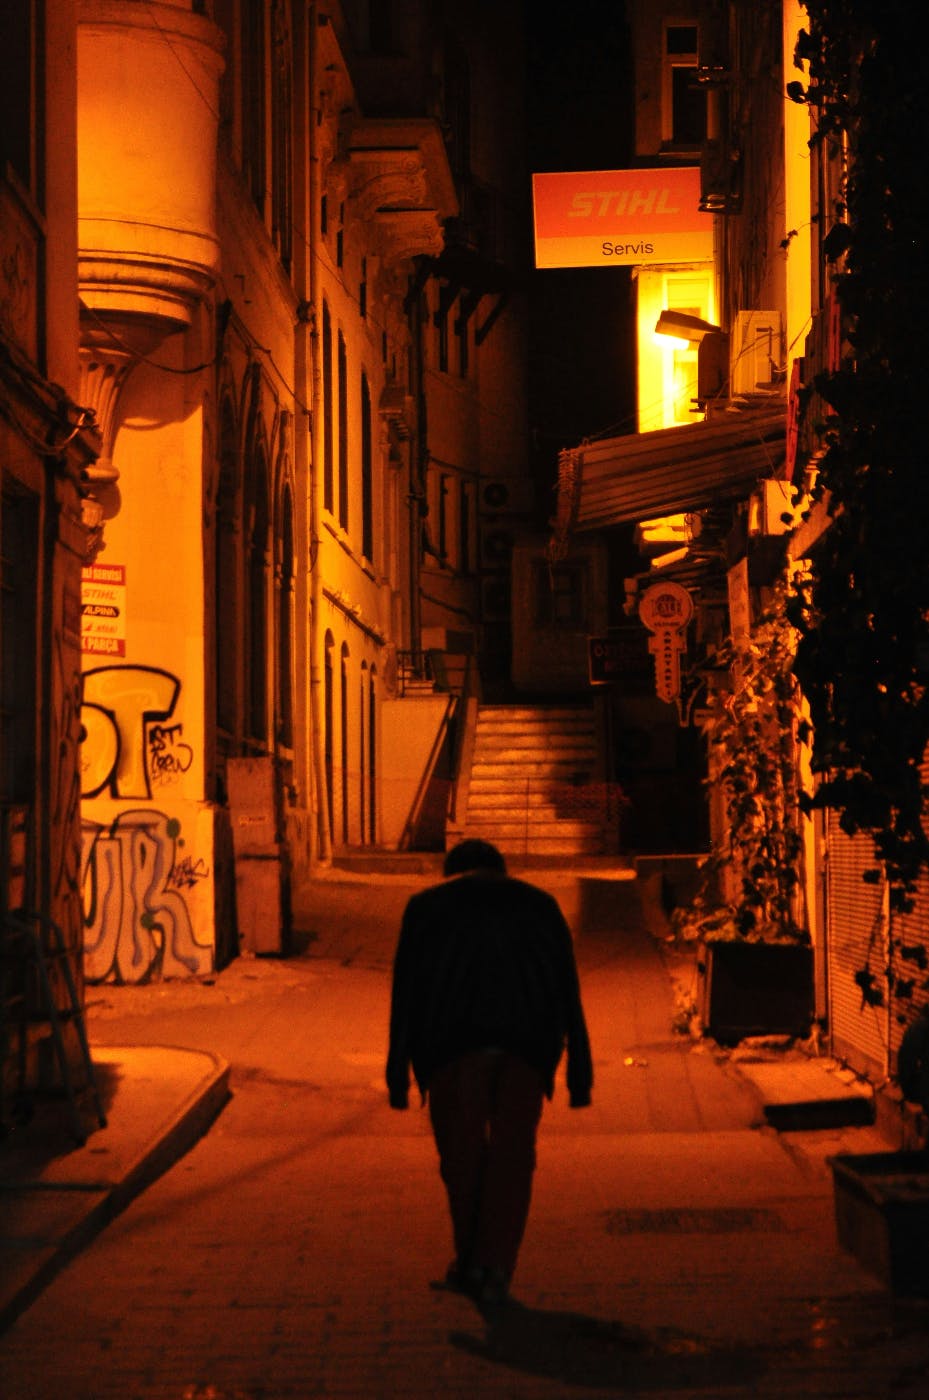 A man walking an empty side street at night lit by amber neon light